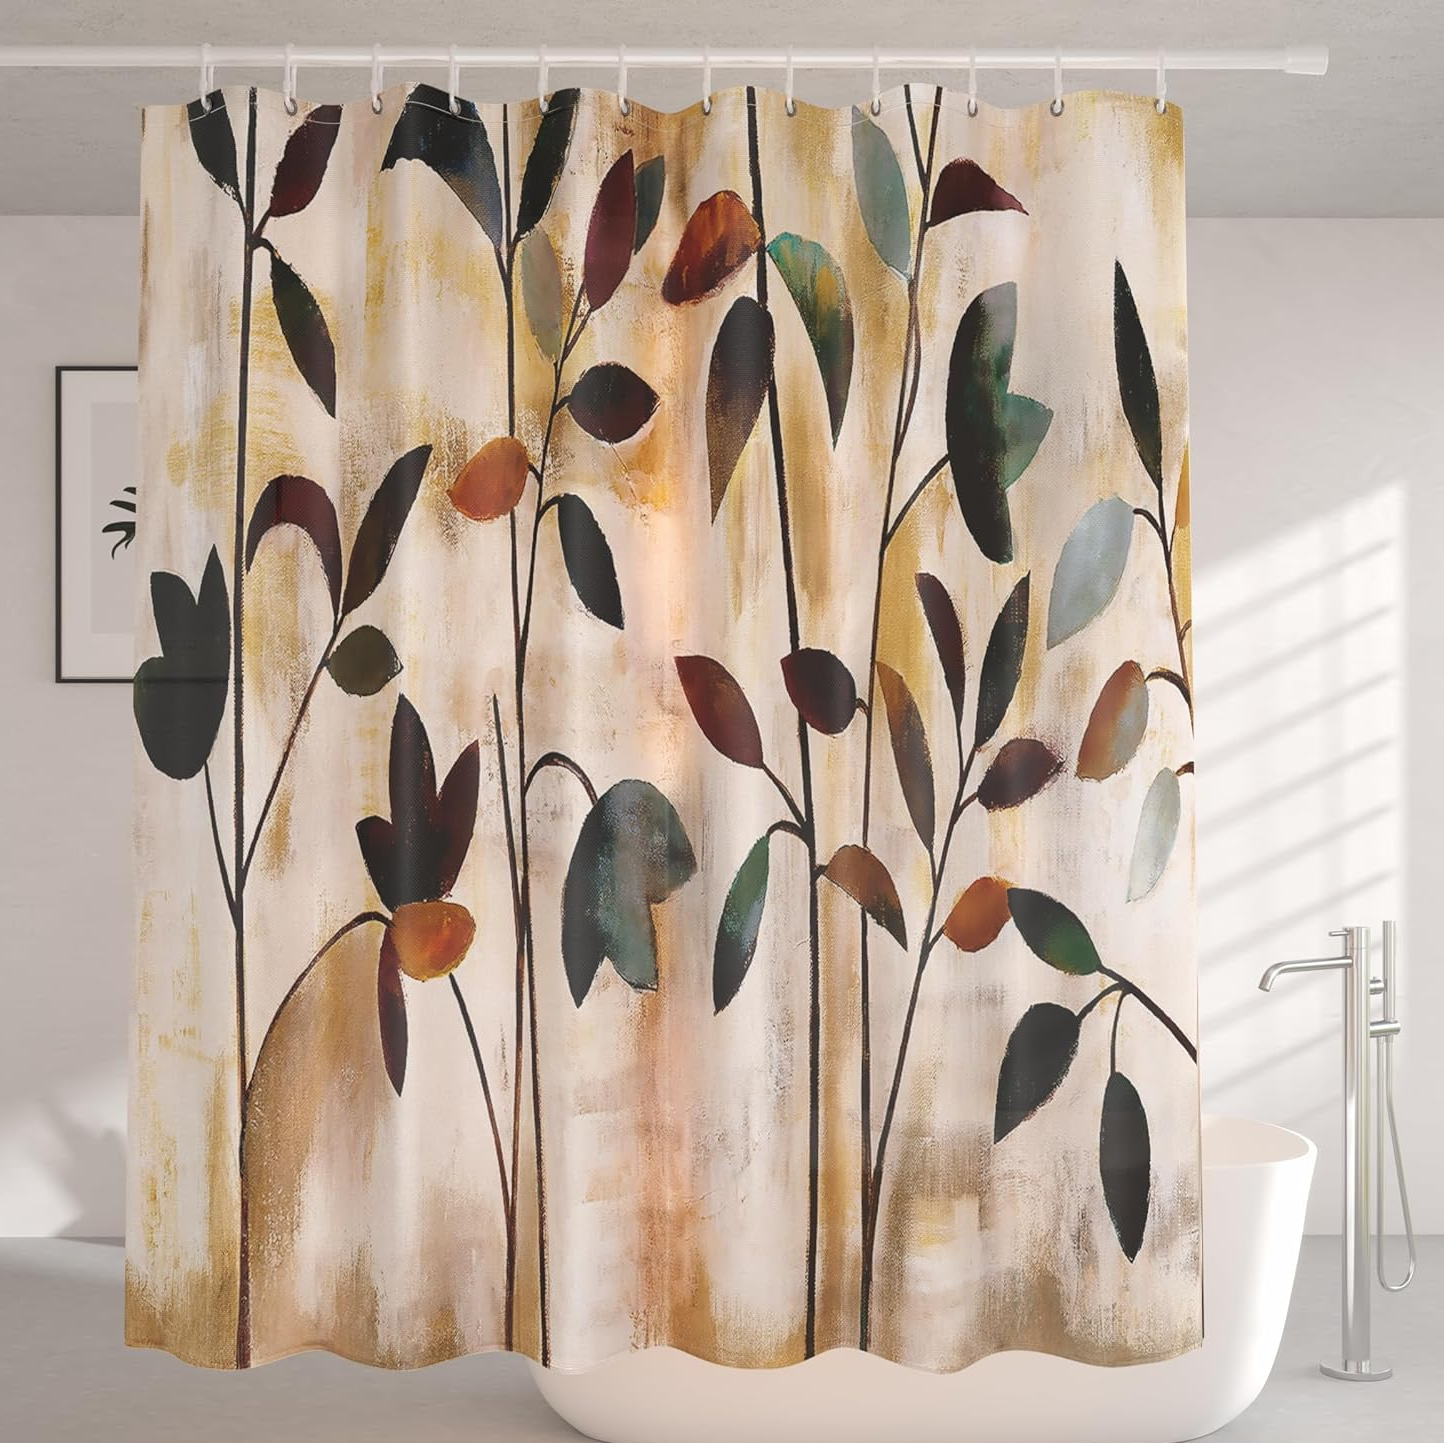 Subtex Waterproof Shower Curtain Printed Leaves Design, Includes 10 Plastic Hooks